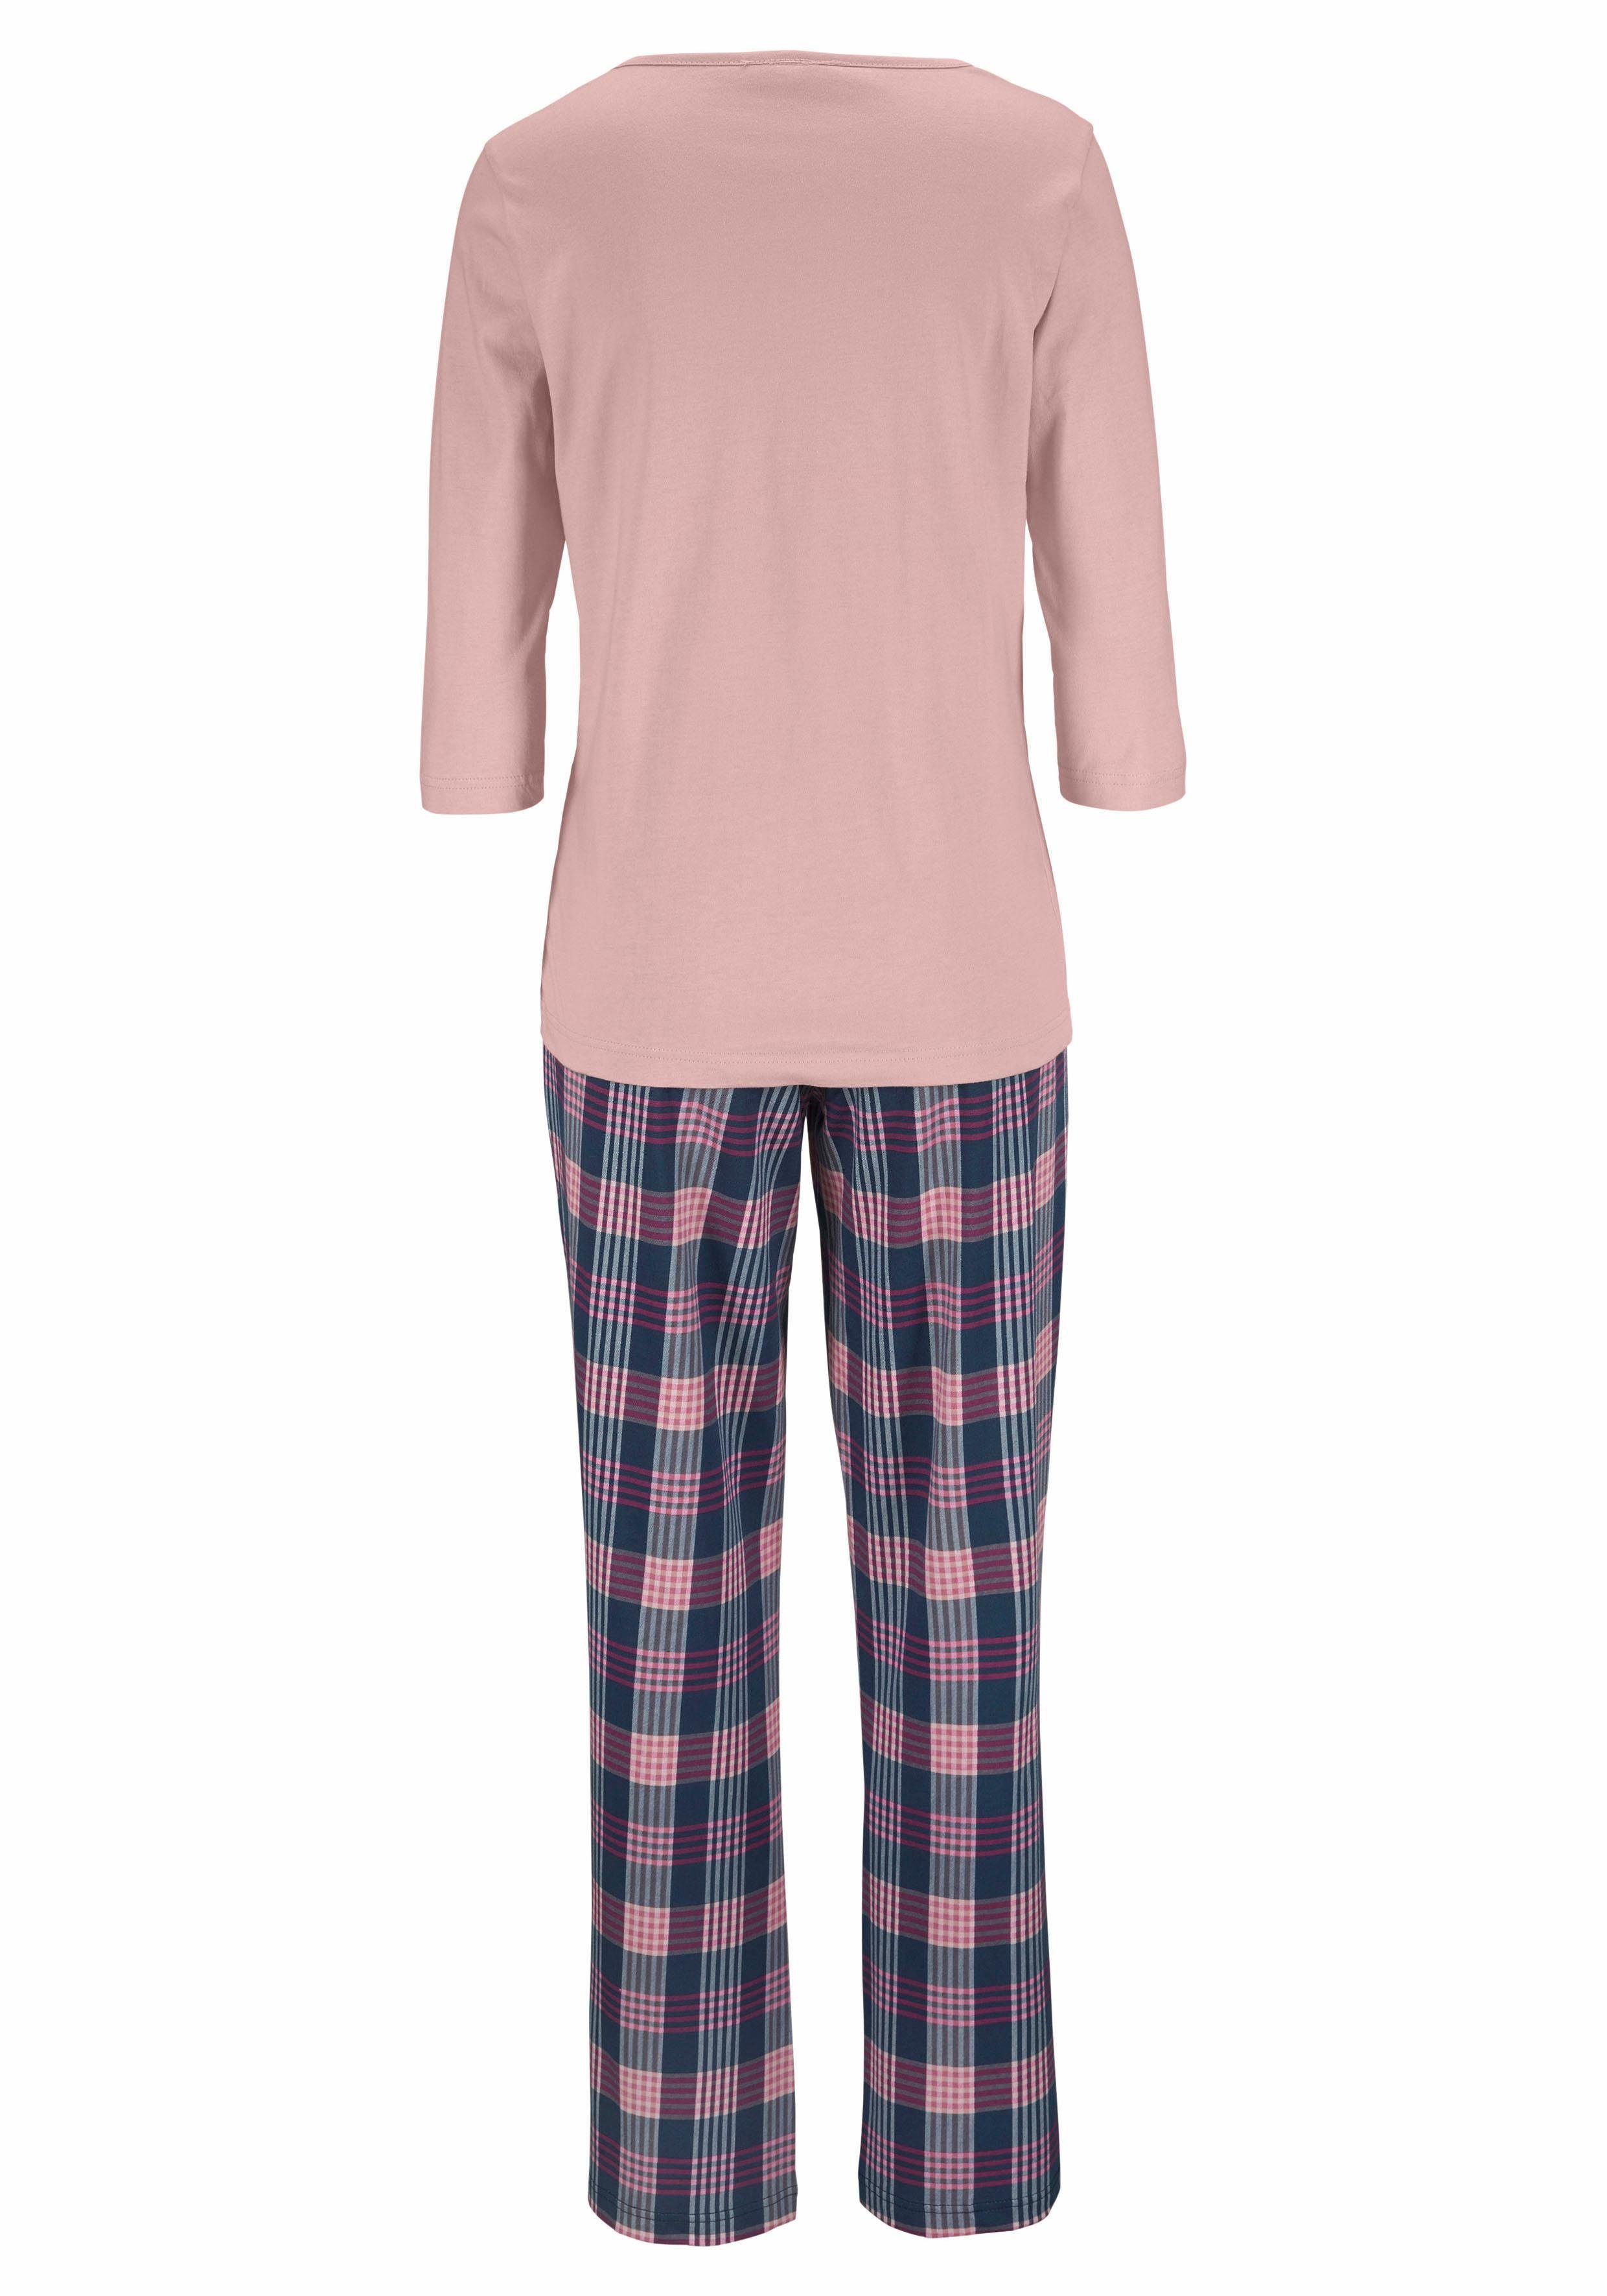 2 Stück) Pyjama mit Hose (4 tlg., karierter petite fleur